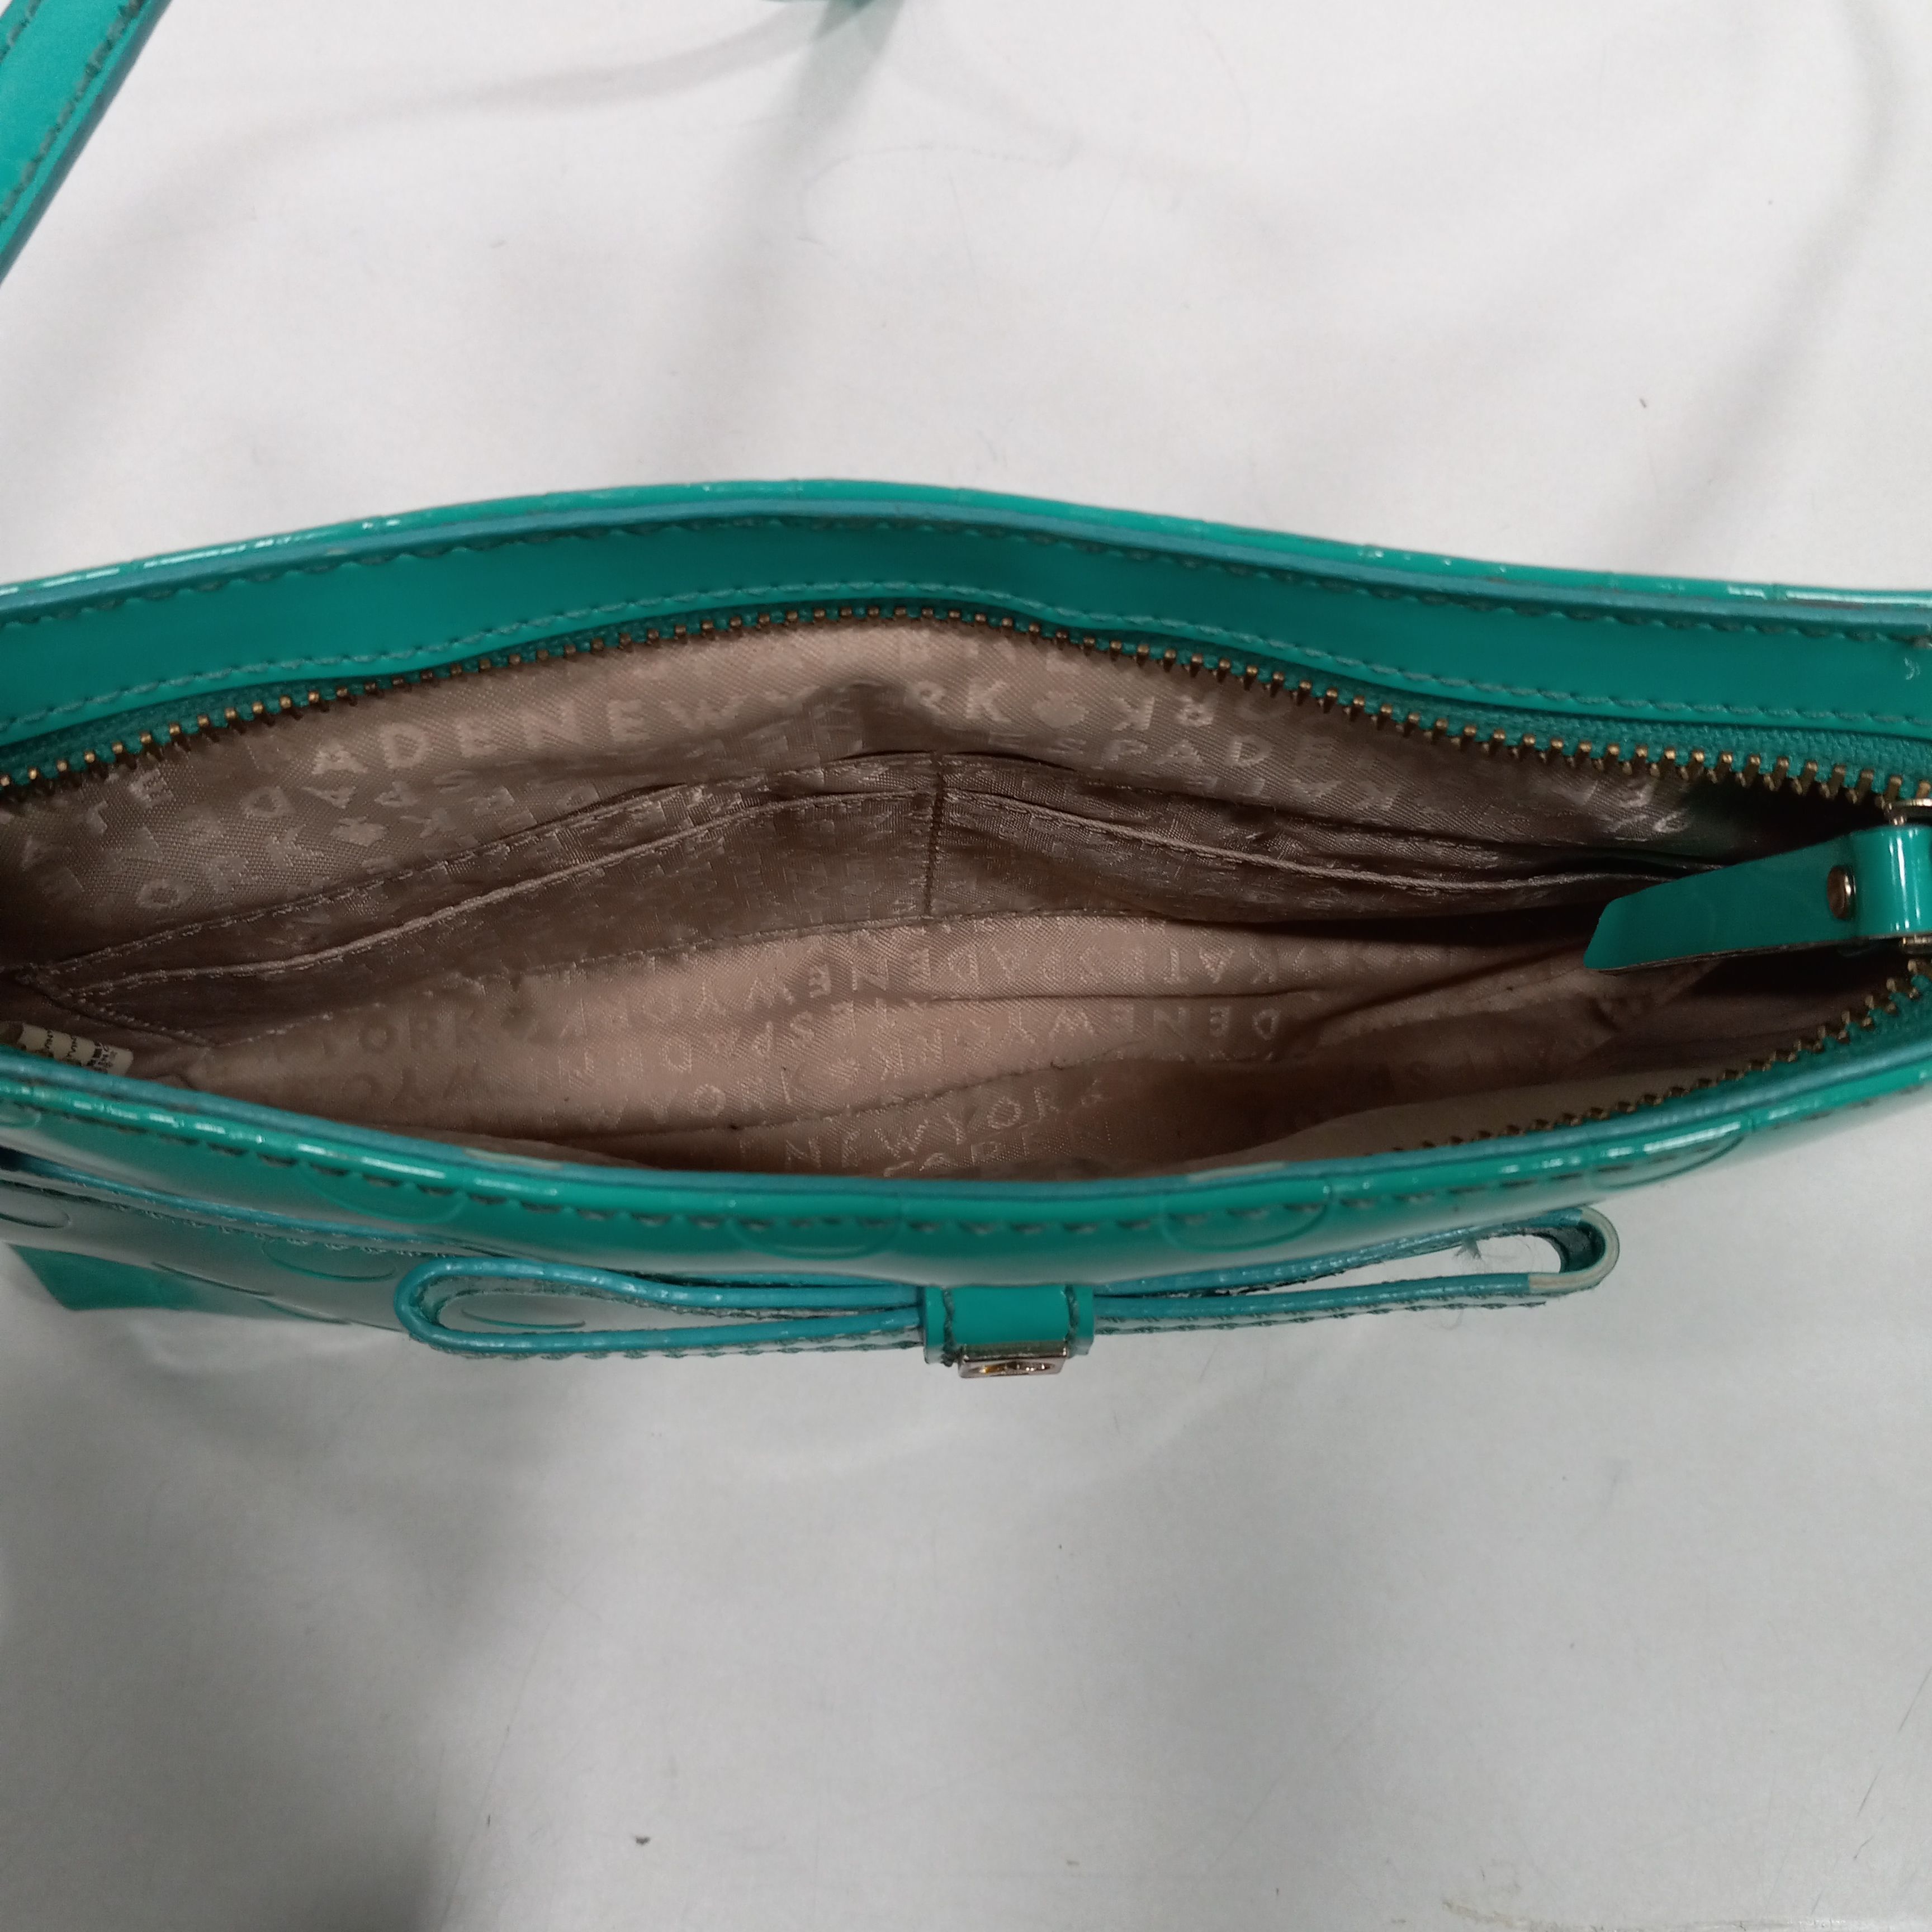 kate spade | Bags | Kate Spade Turquoise Blue Convertible Crossbody Handbag  Purse | Poshmark